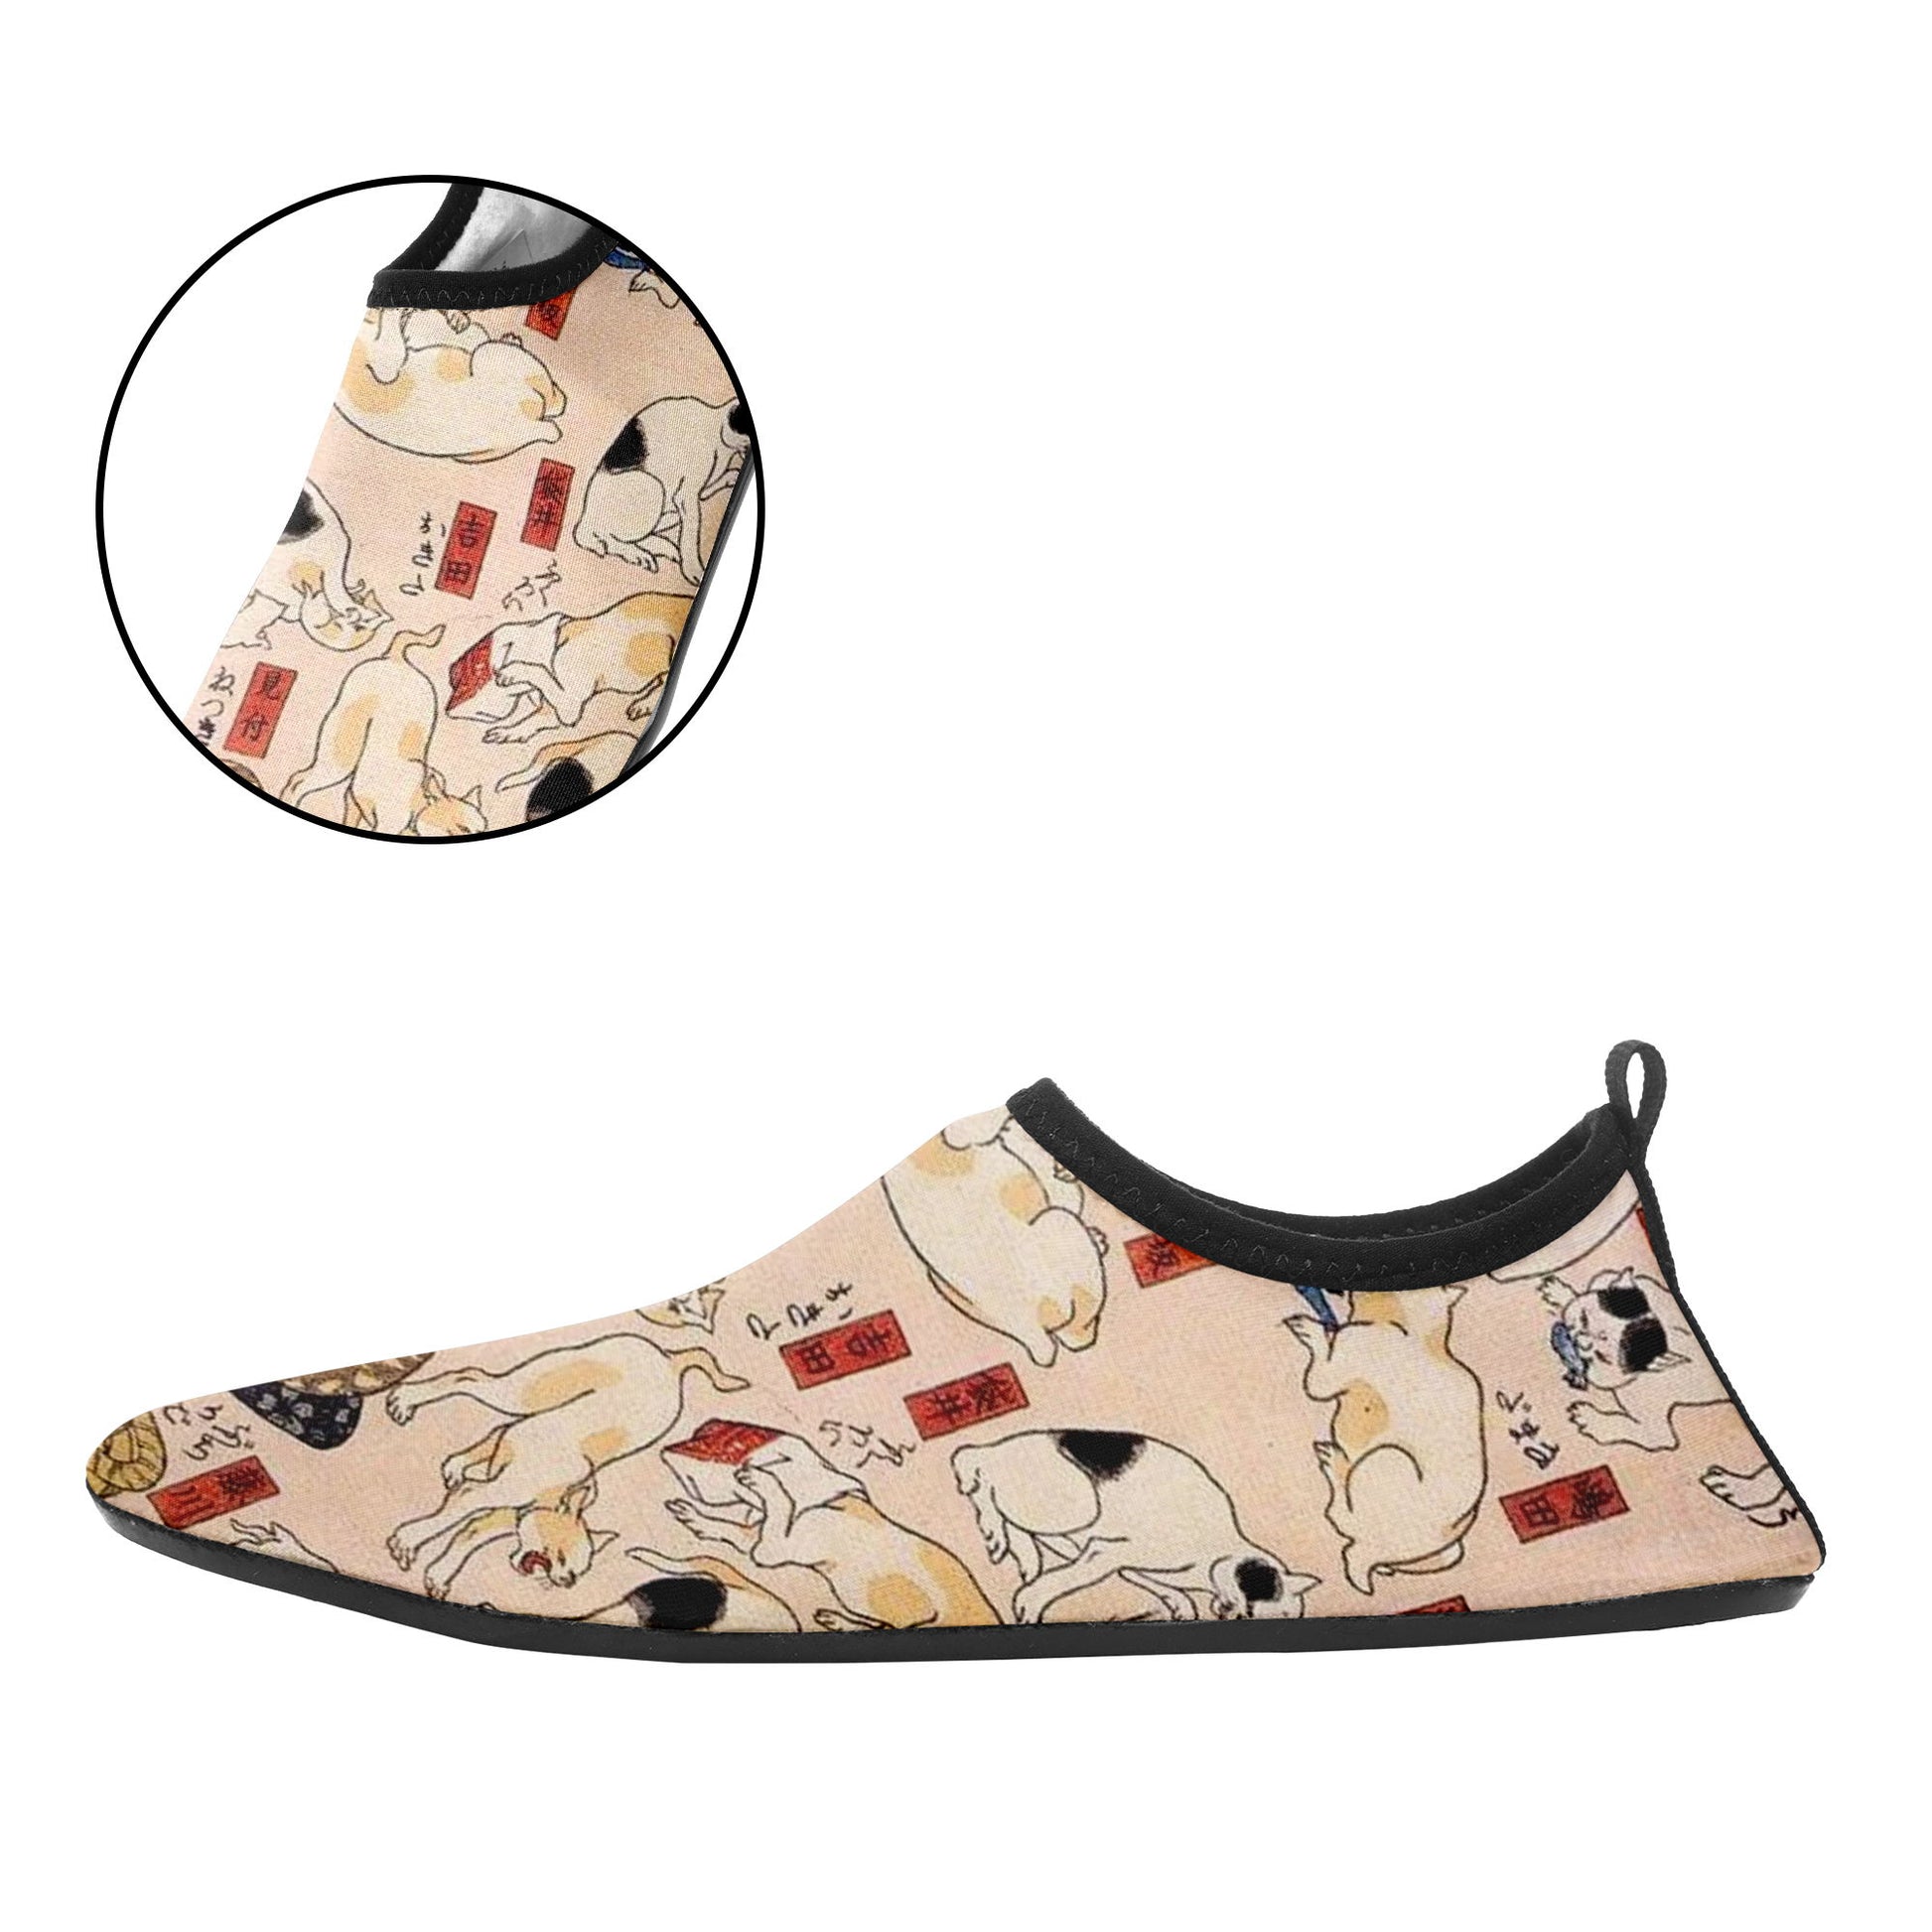 Custom Printed Aqua Shoes 1902: Ukiyo-e Kuniyoshi Utagawa's Cats Suggested as the Fifty Three Stations of the Tokaido Beach Wading Shoes 5